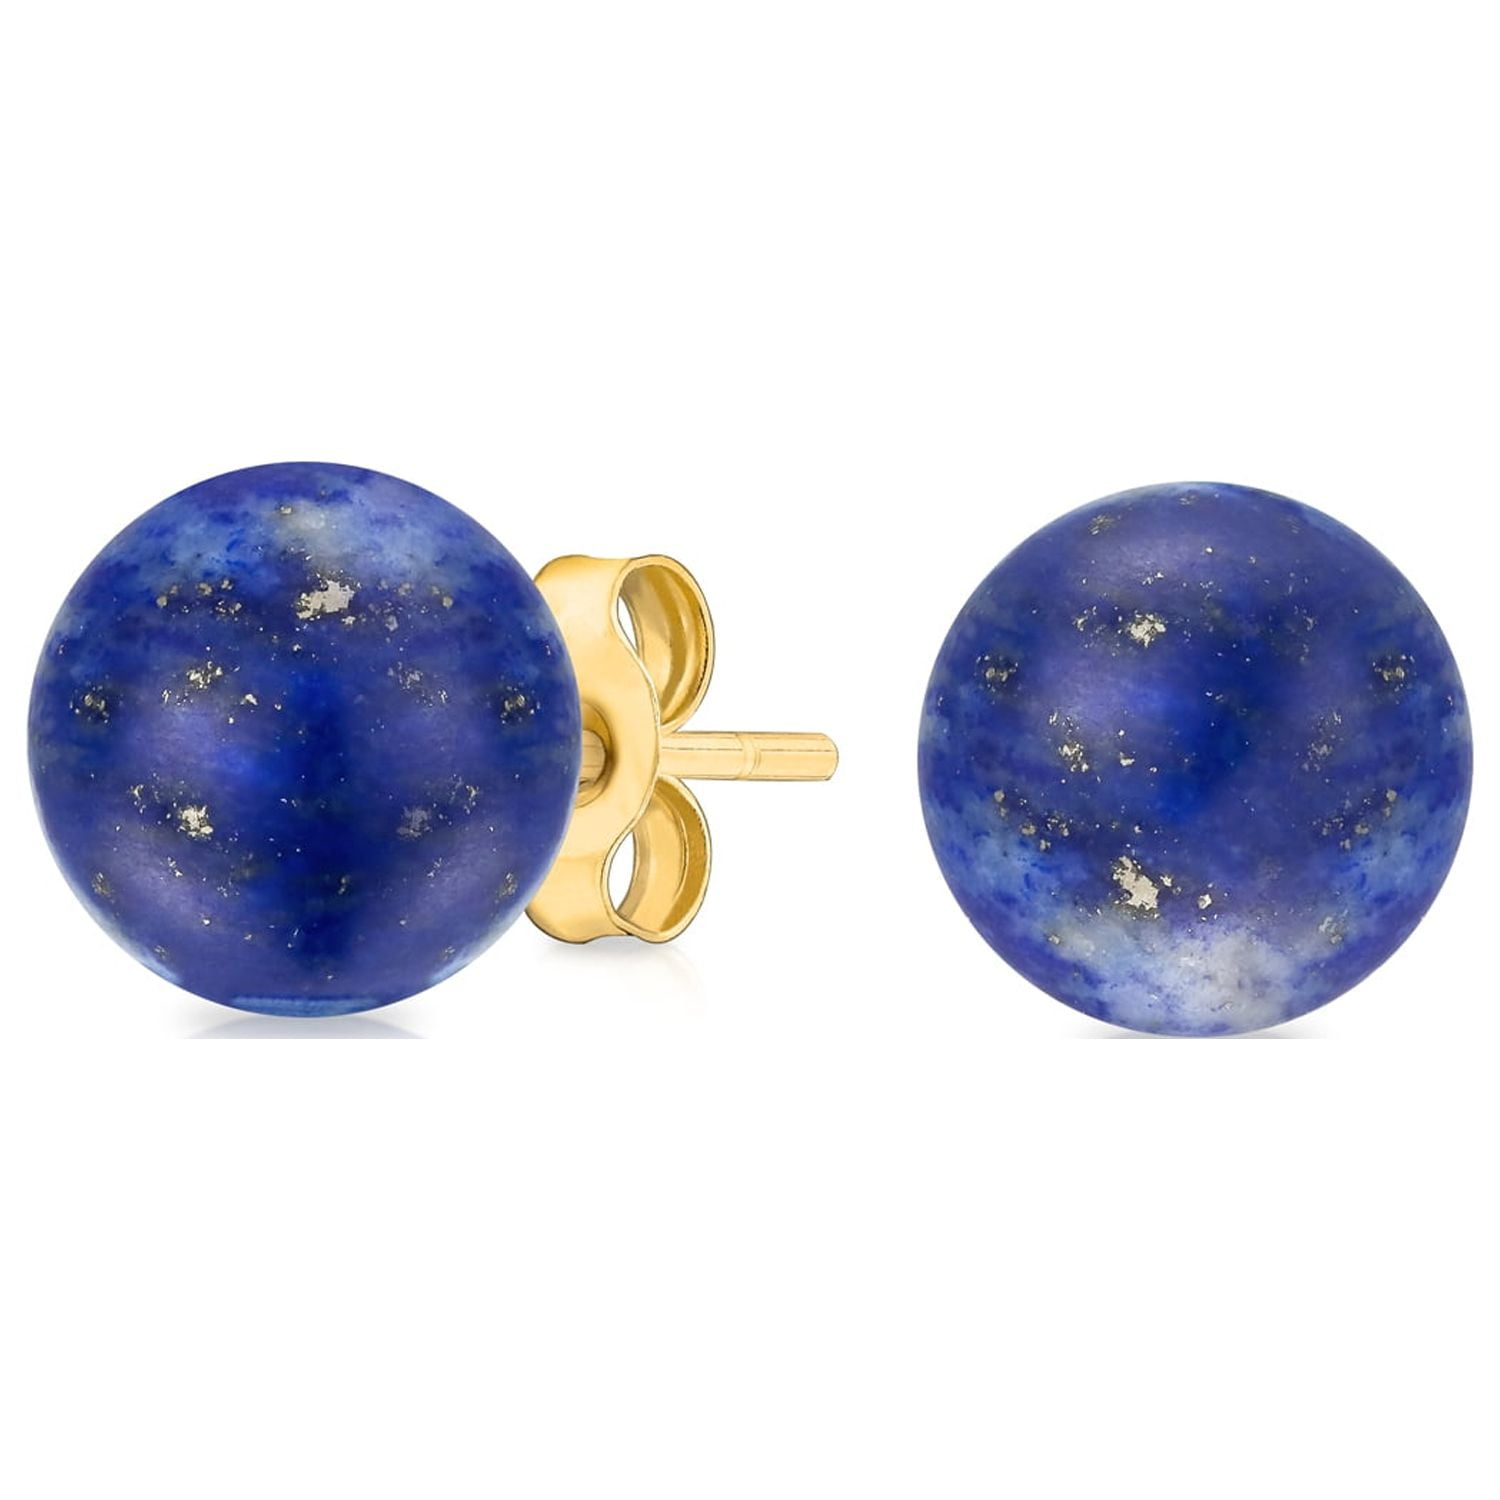 14k Gold Lapis Lazuli Earrings